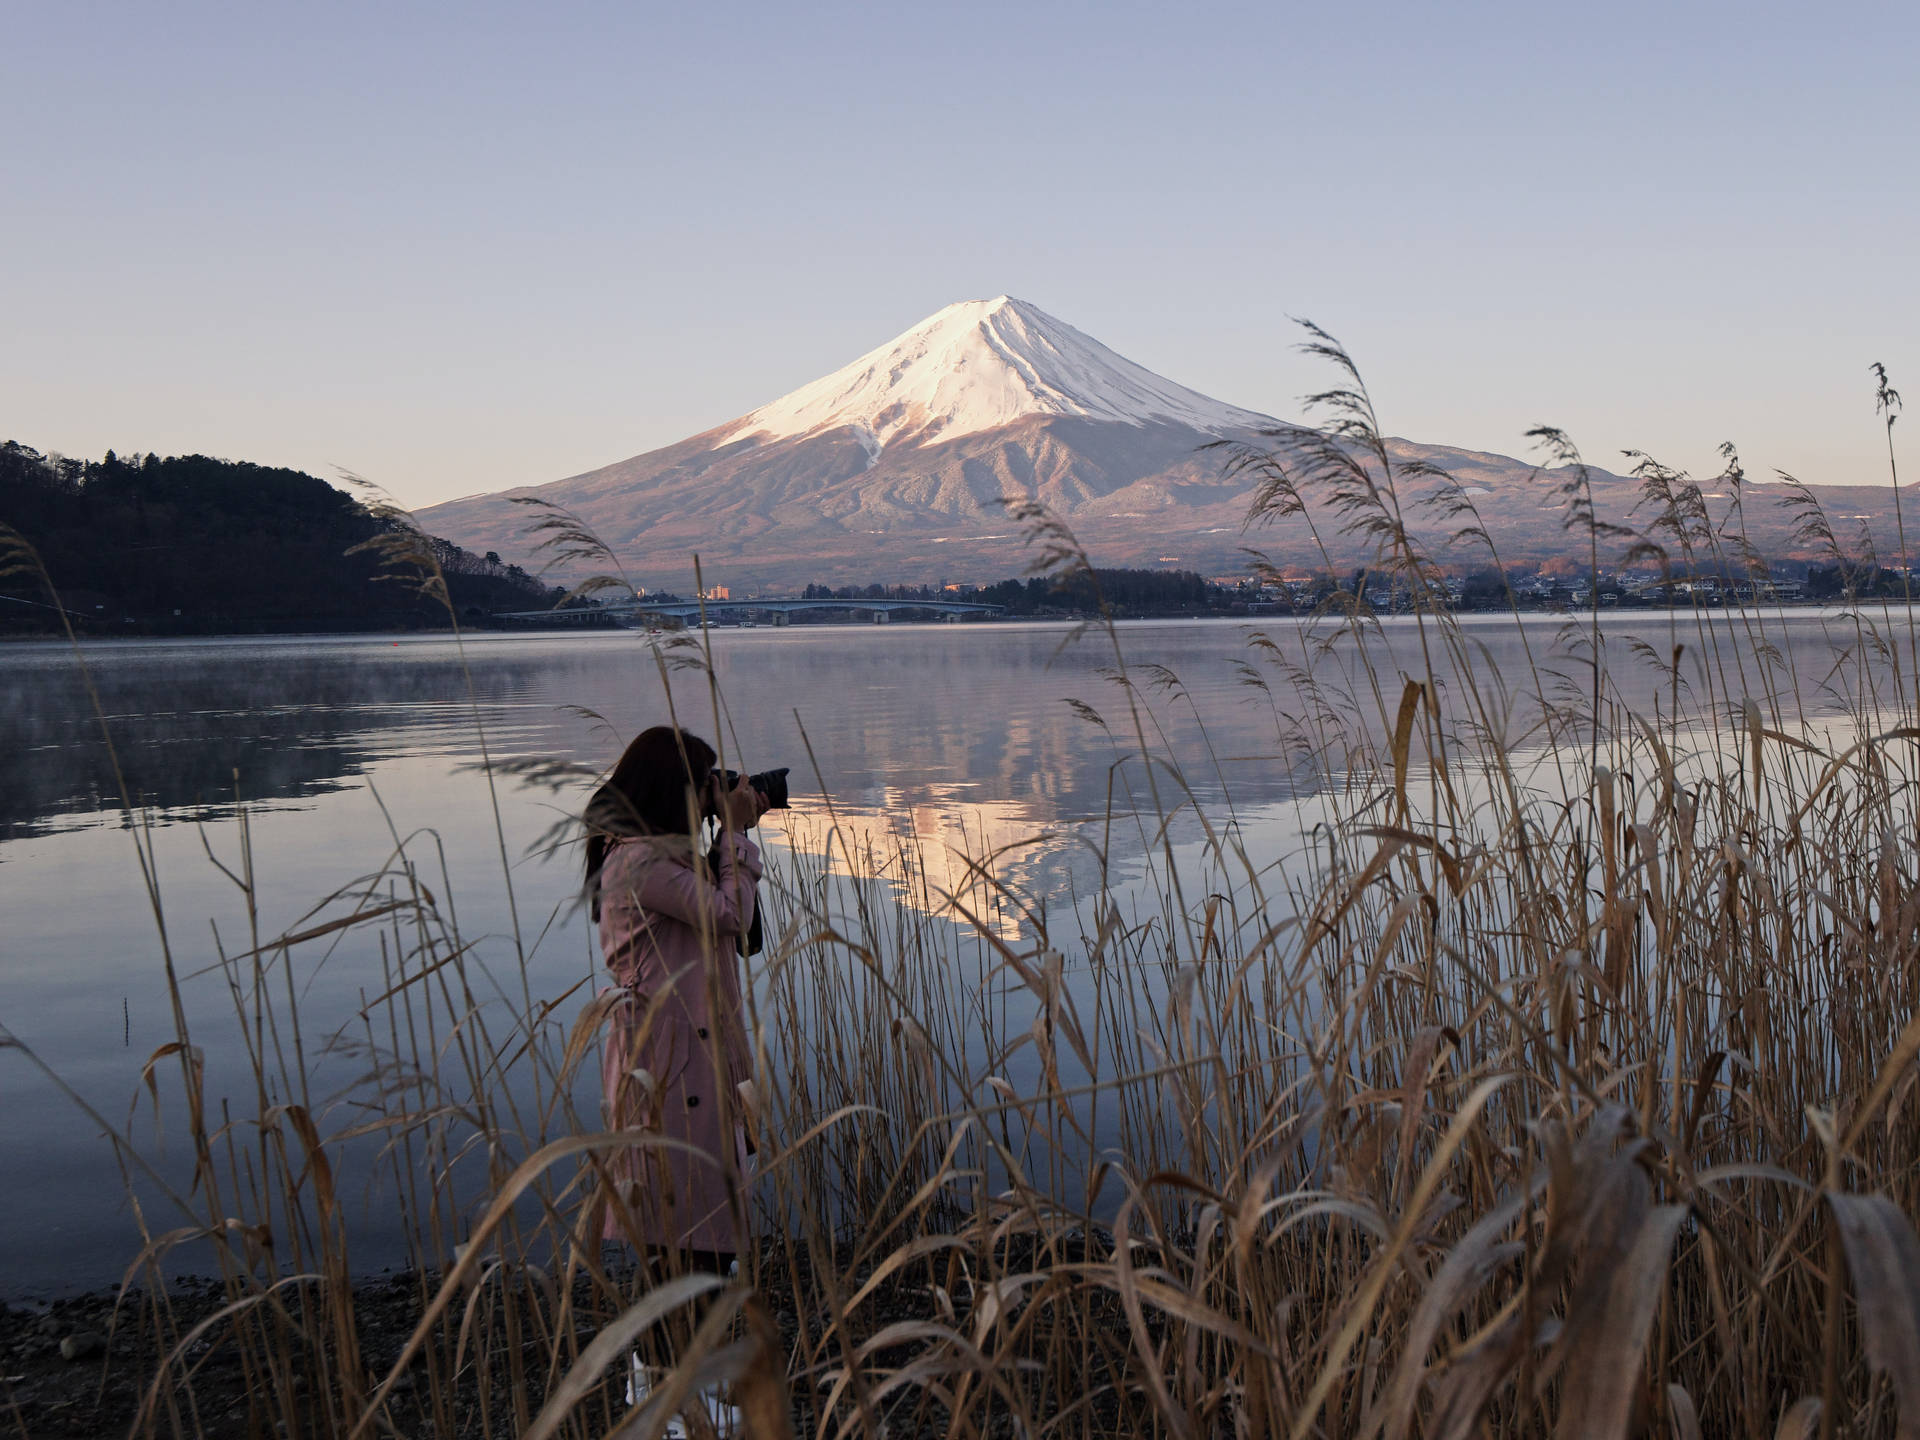 Photographer And Mount Fuji Background